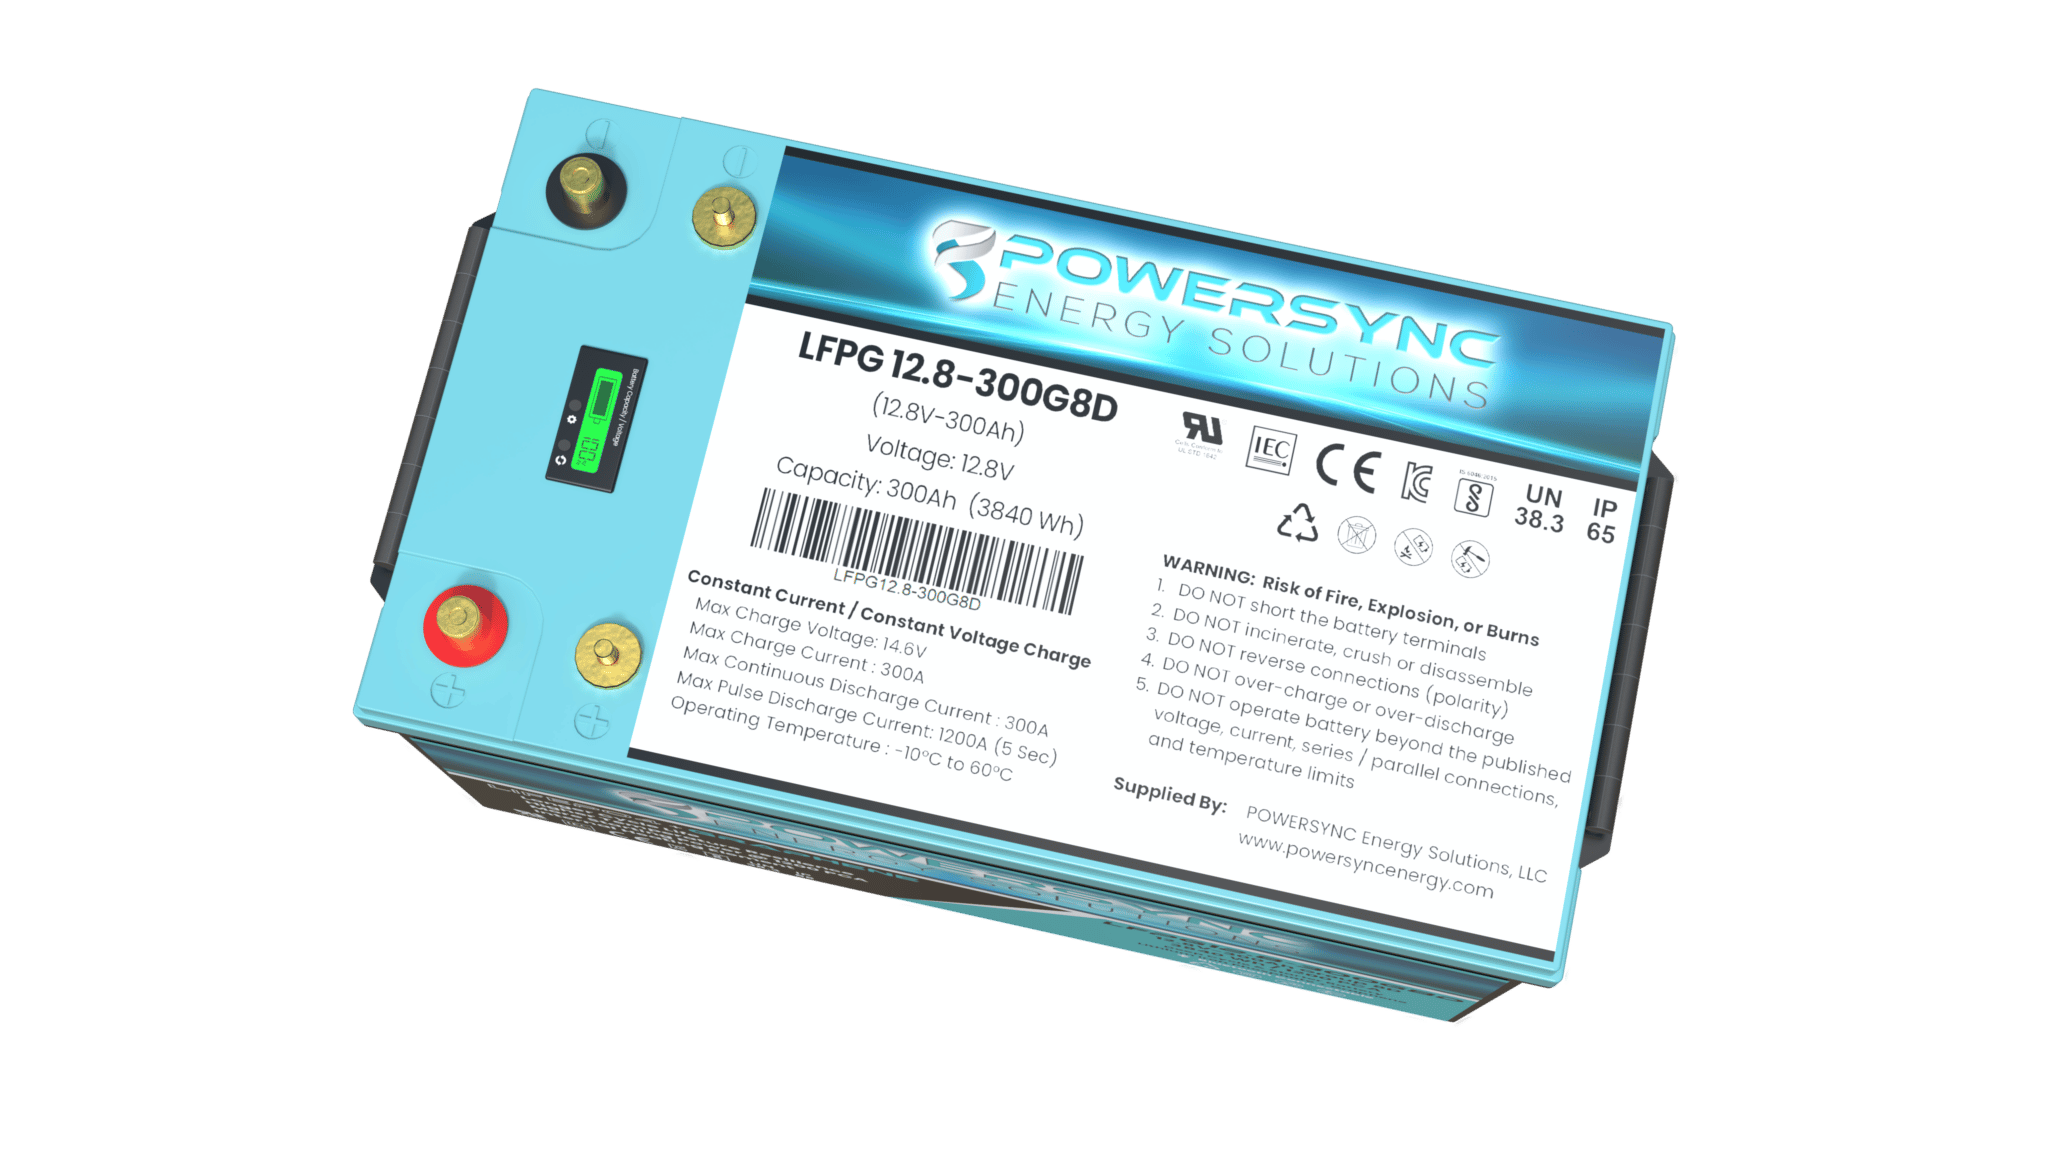 LFPG12.8-300G8D Batería de Litio de Doble Uso LiFePO4+Grafeno - POWERSYNC  Energy Solutions